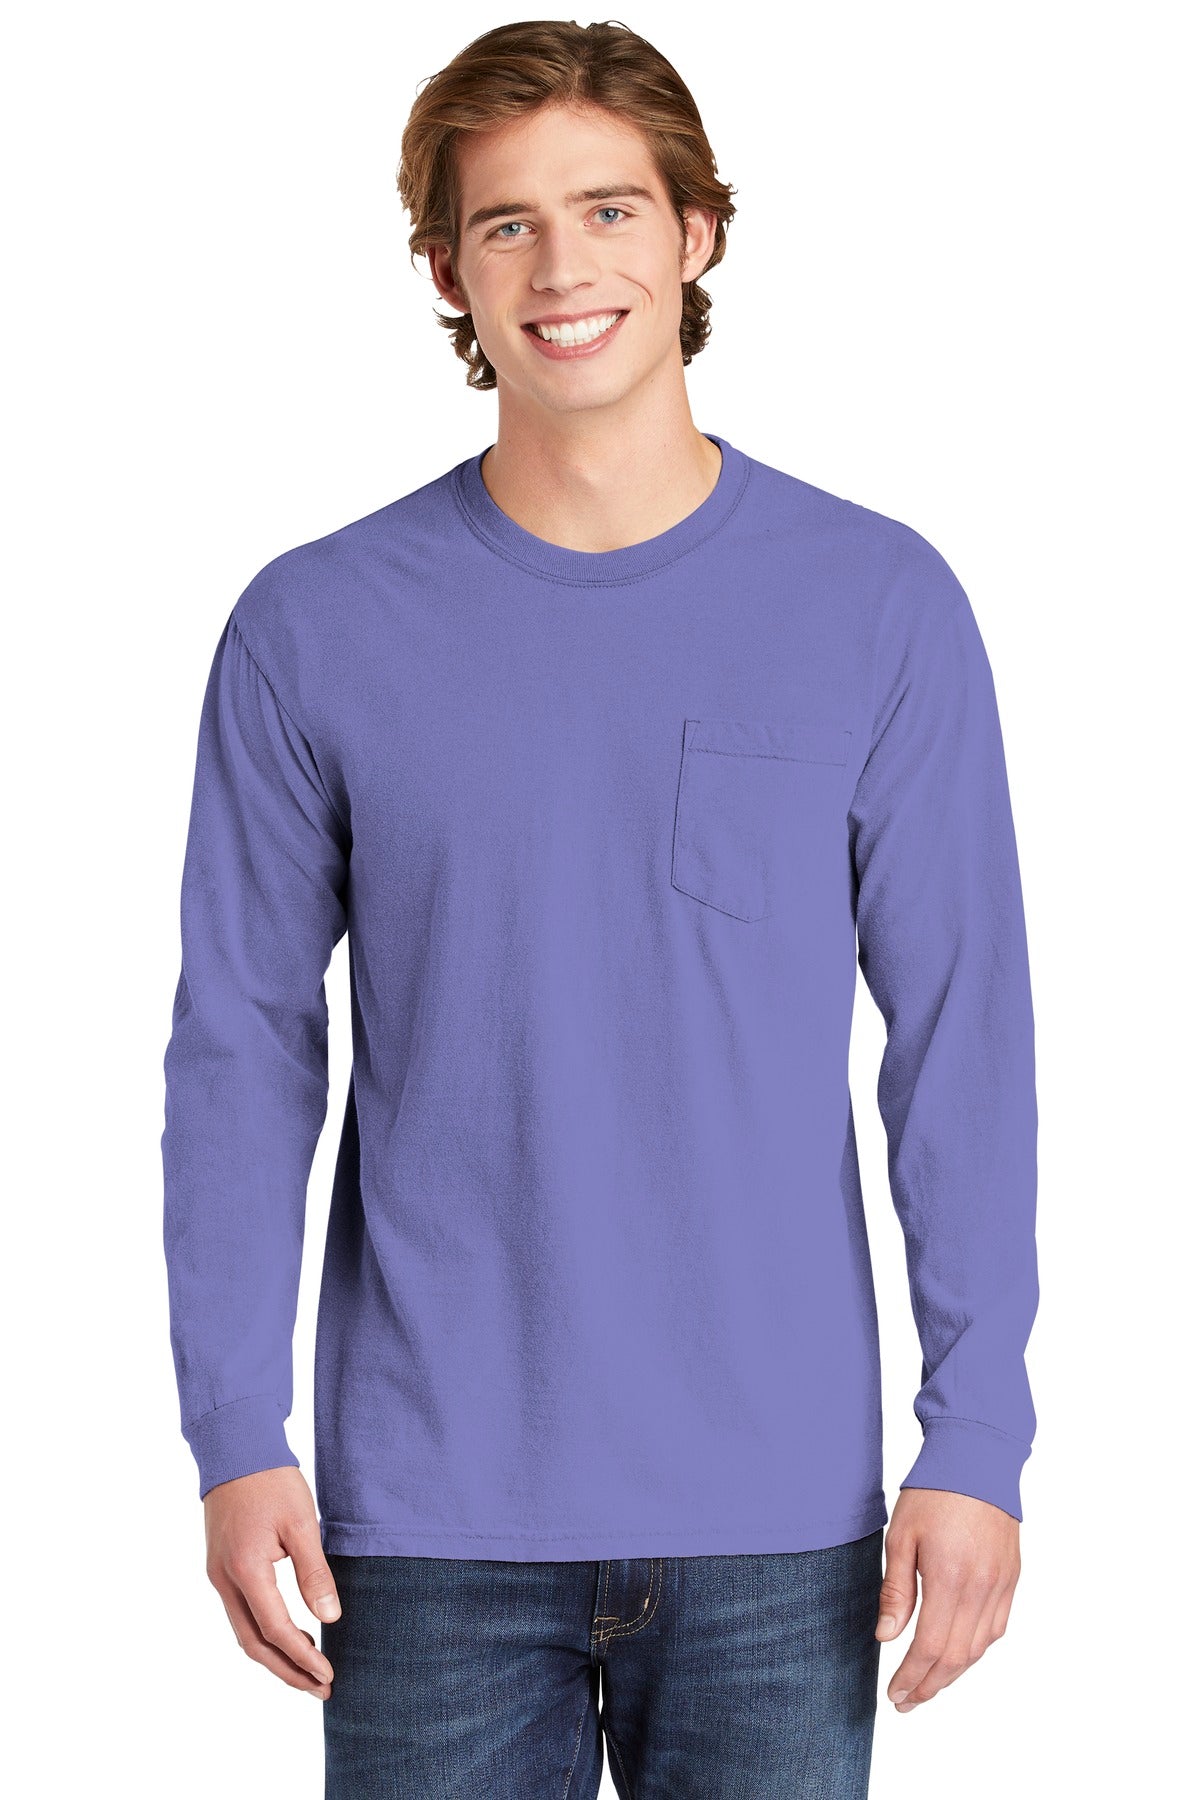 Photo of Comfort Colors T-Shirts 4410  color  Violet